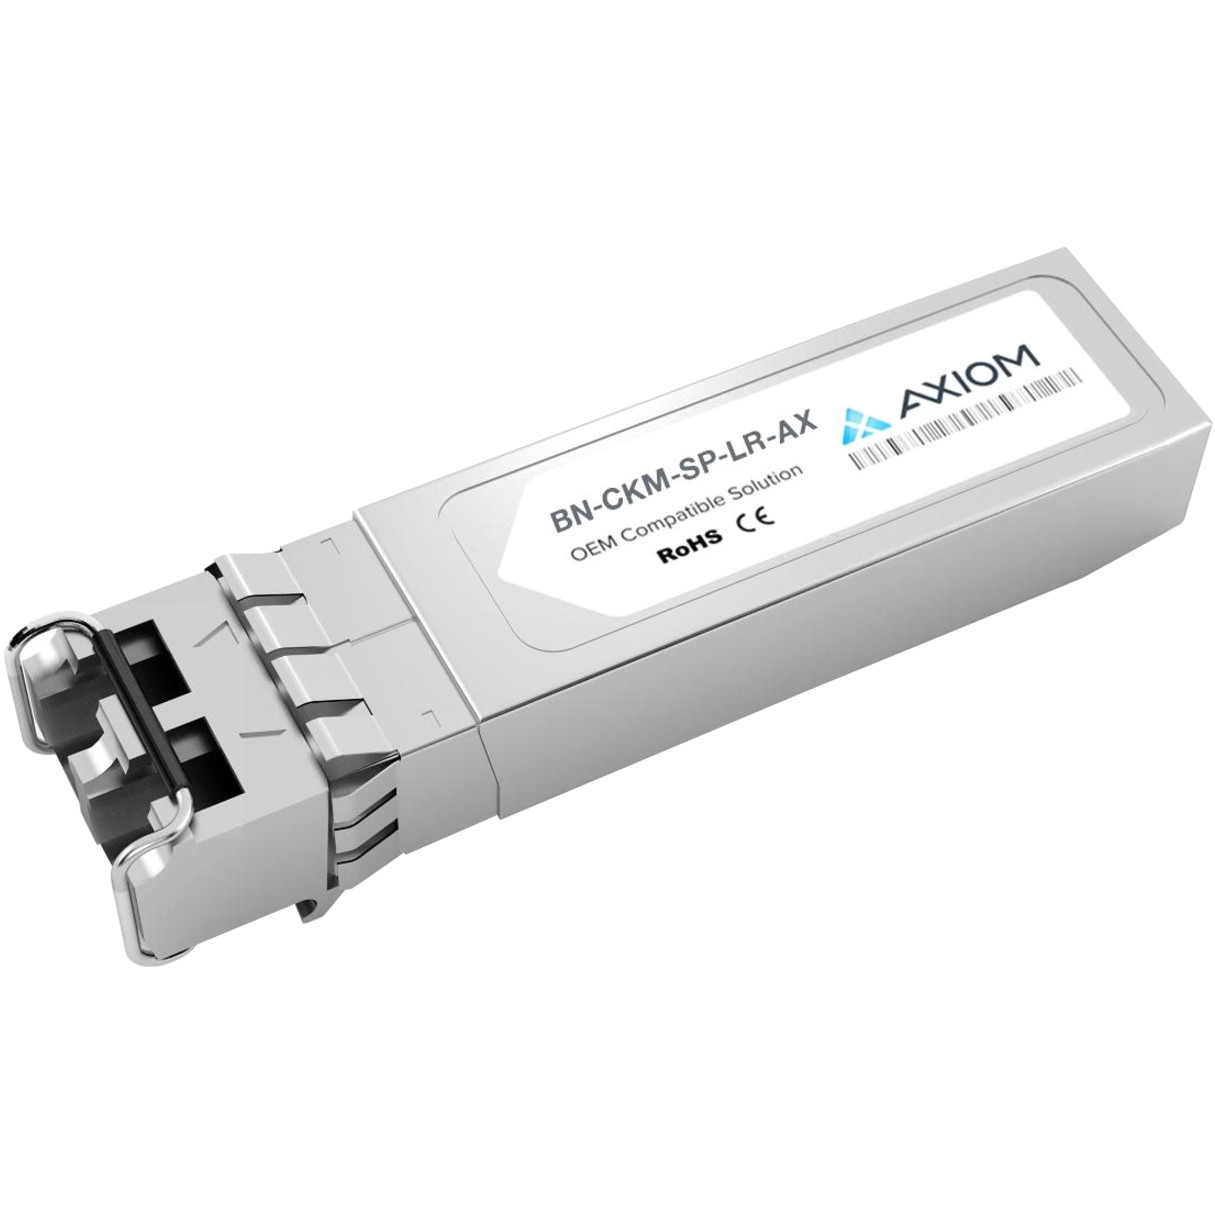 Axiom Memory Solutions 10GBASE-LR SFP+ Transceiver for Blade NetworksBN-CKM-SP-LRFor Optical Network, Data Networking1 x 10GBase-LROptical Fi… BN-CKM-SP-LR-AX